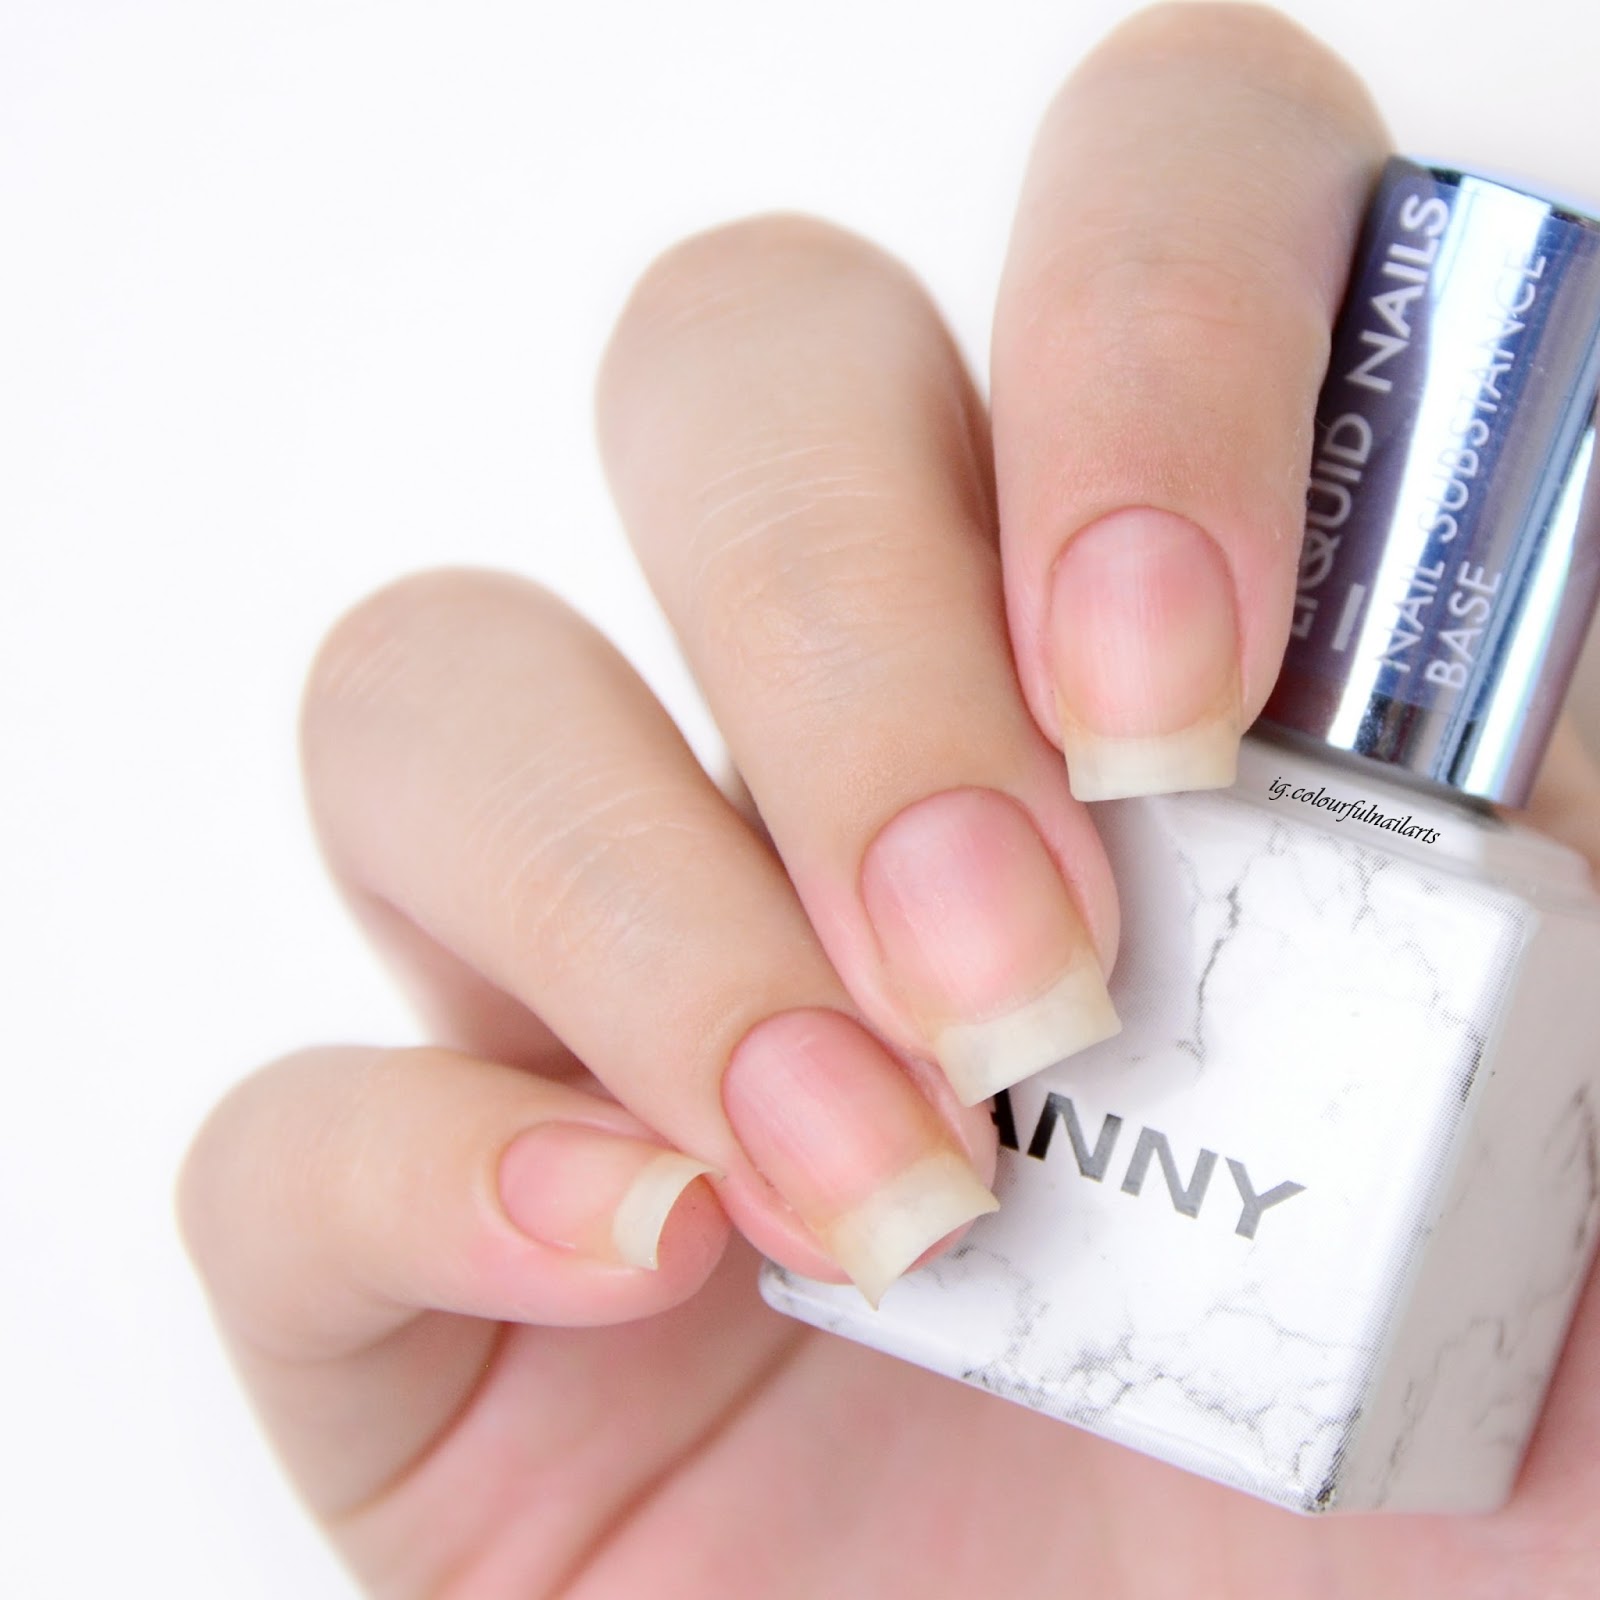 ANNY nail polish collection 2020 - YouTube